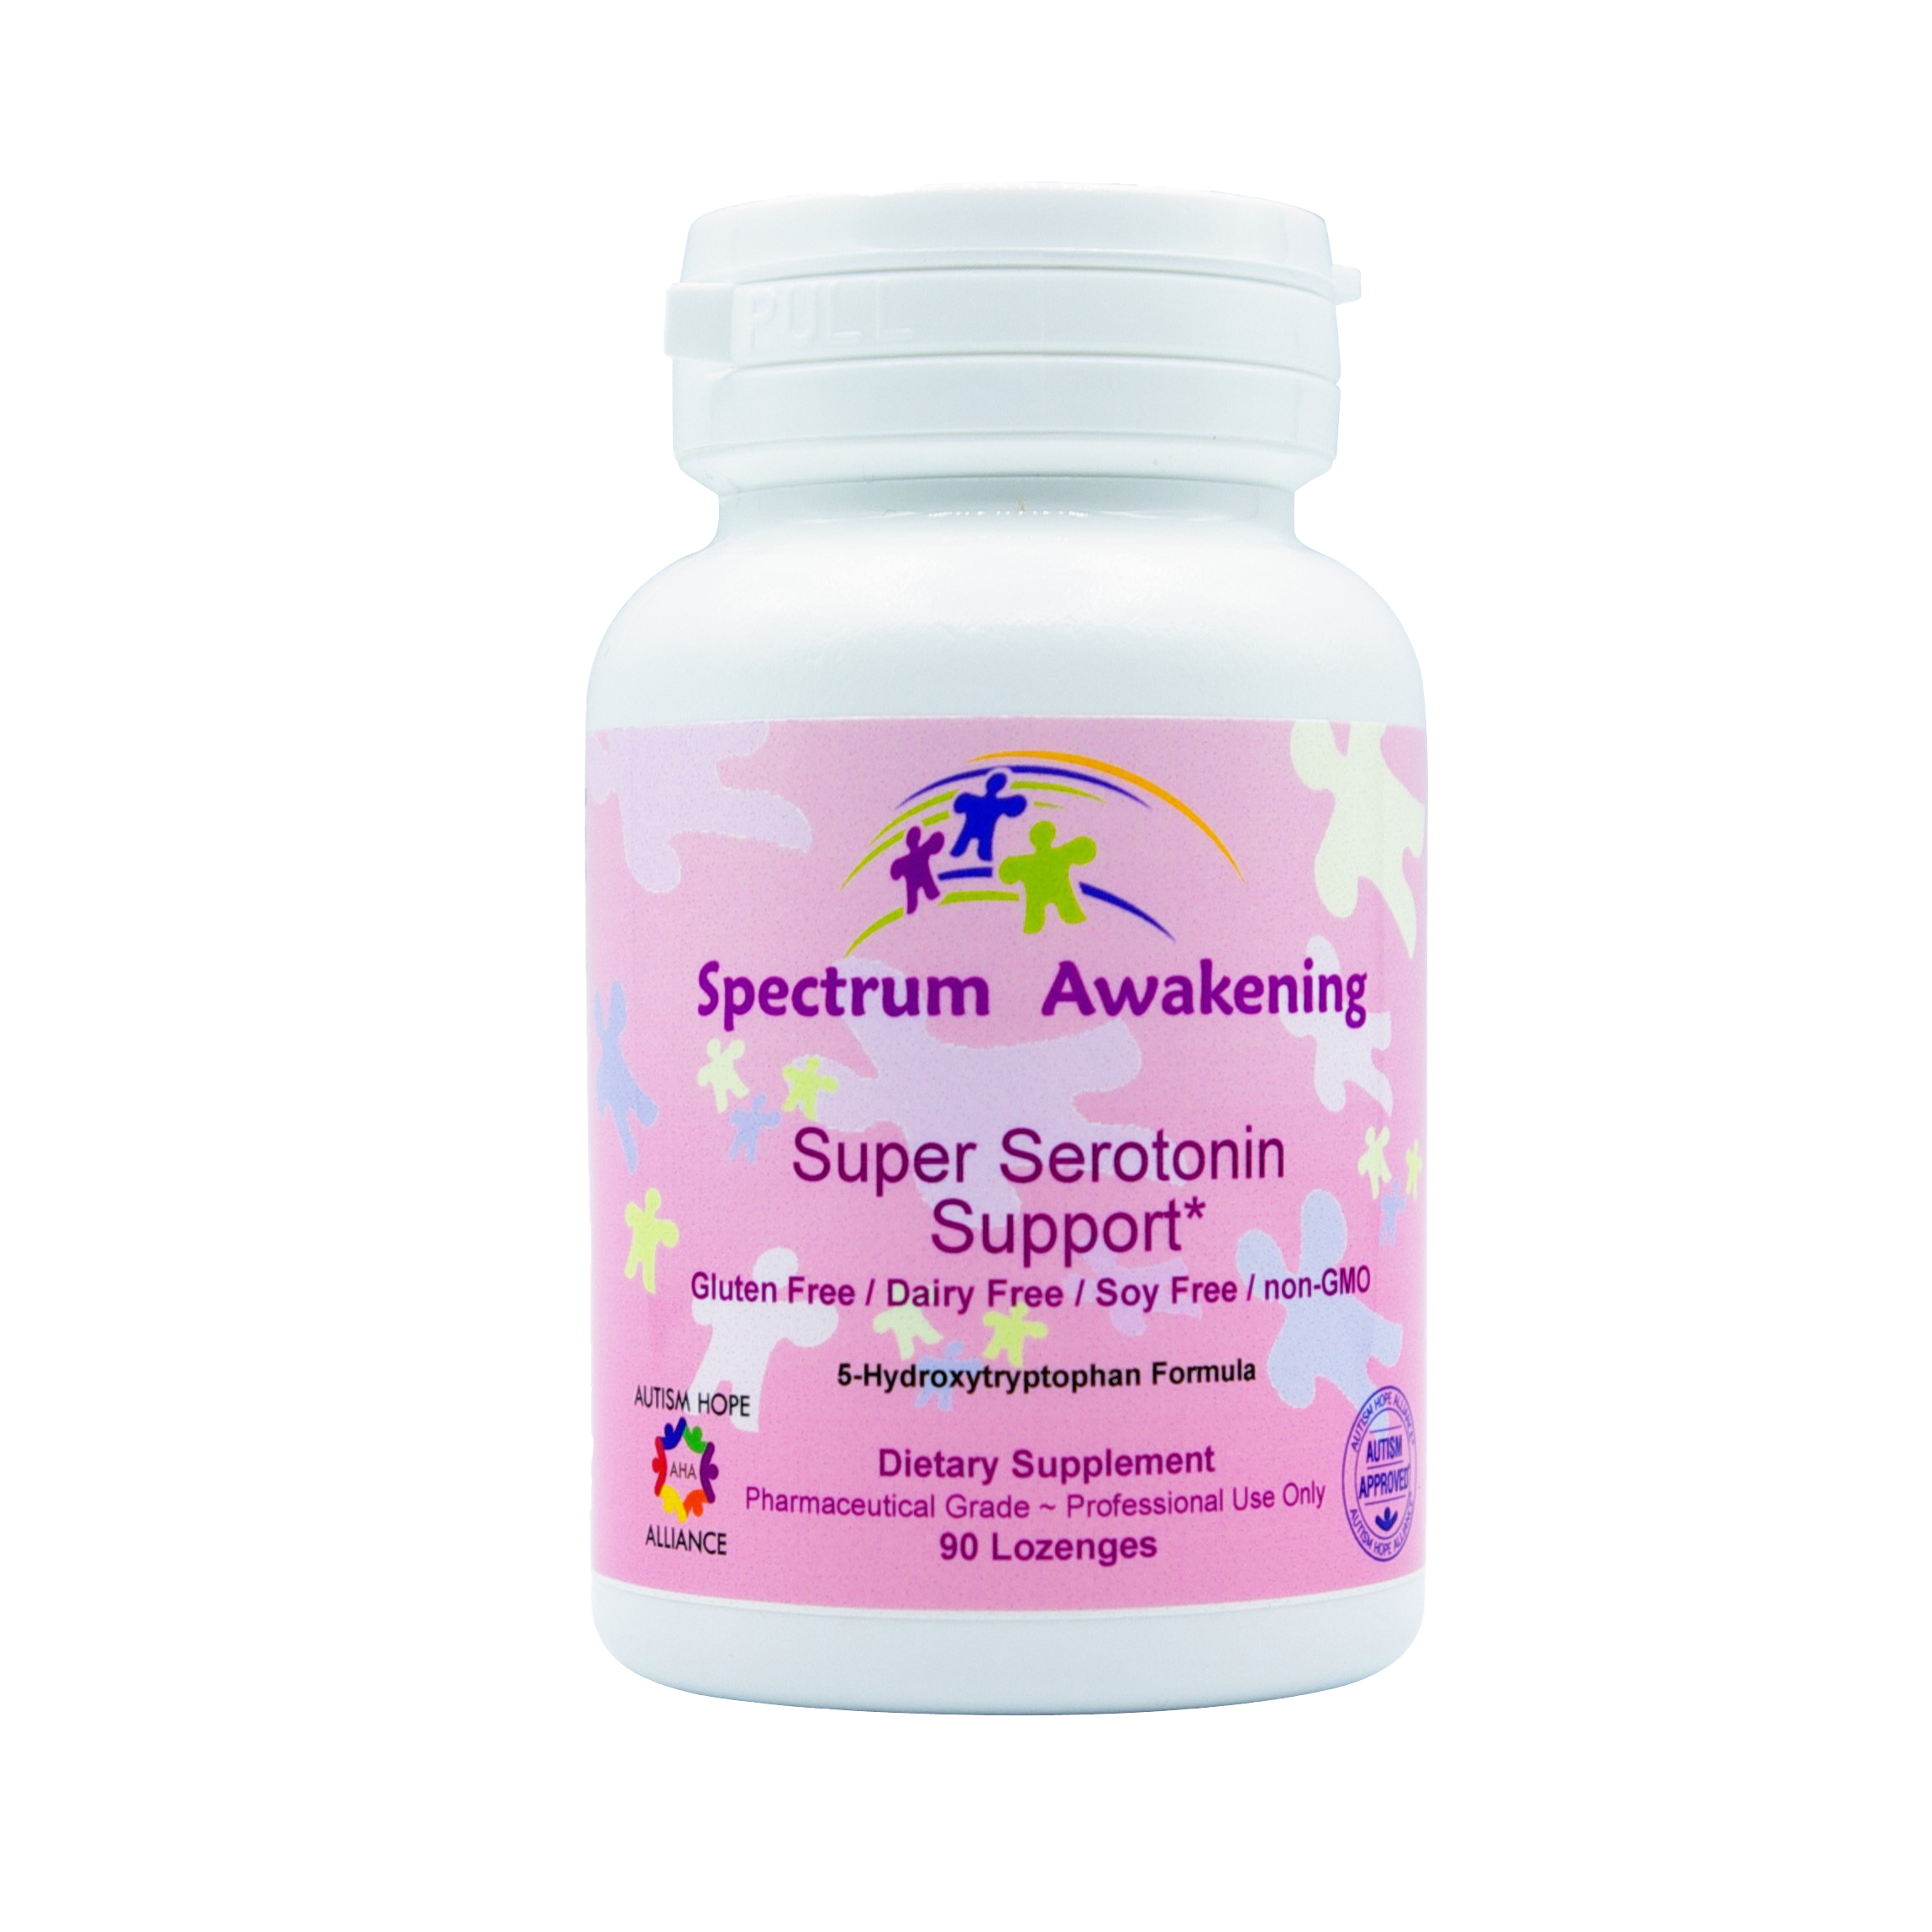 Spectrum Awakening Super Serotonin Support